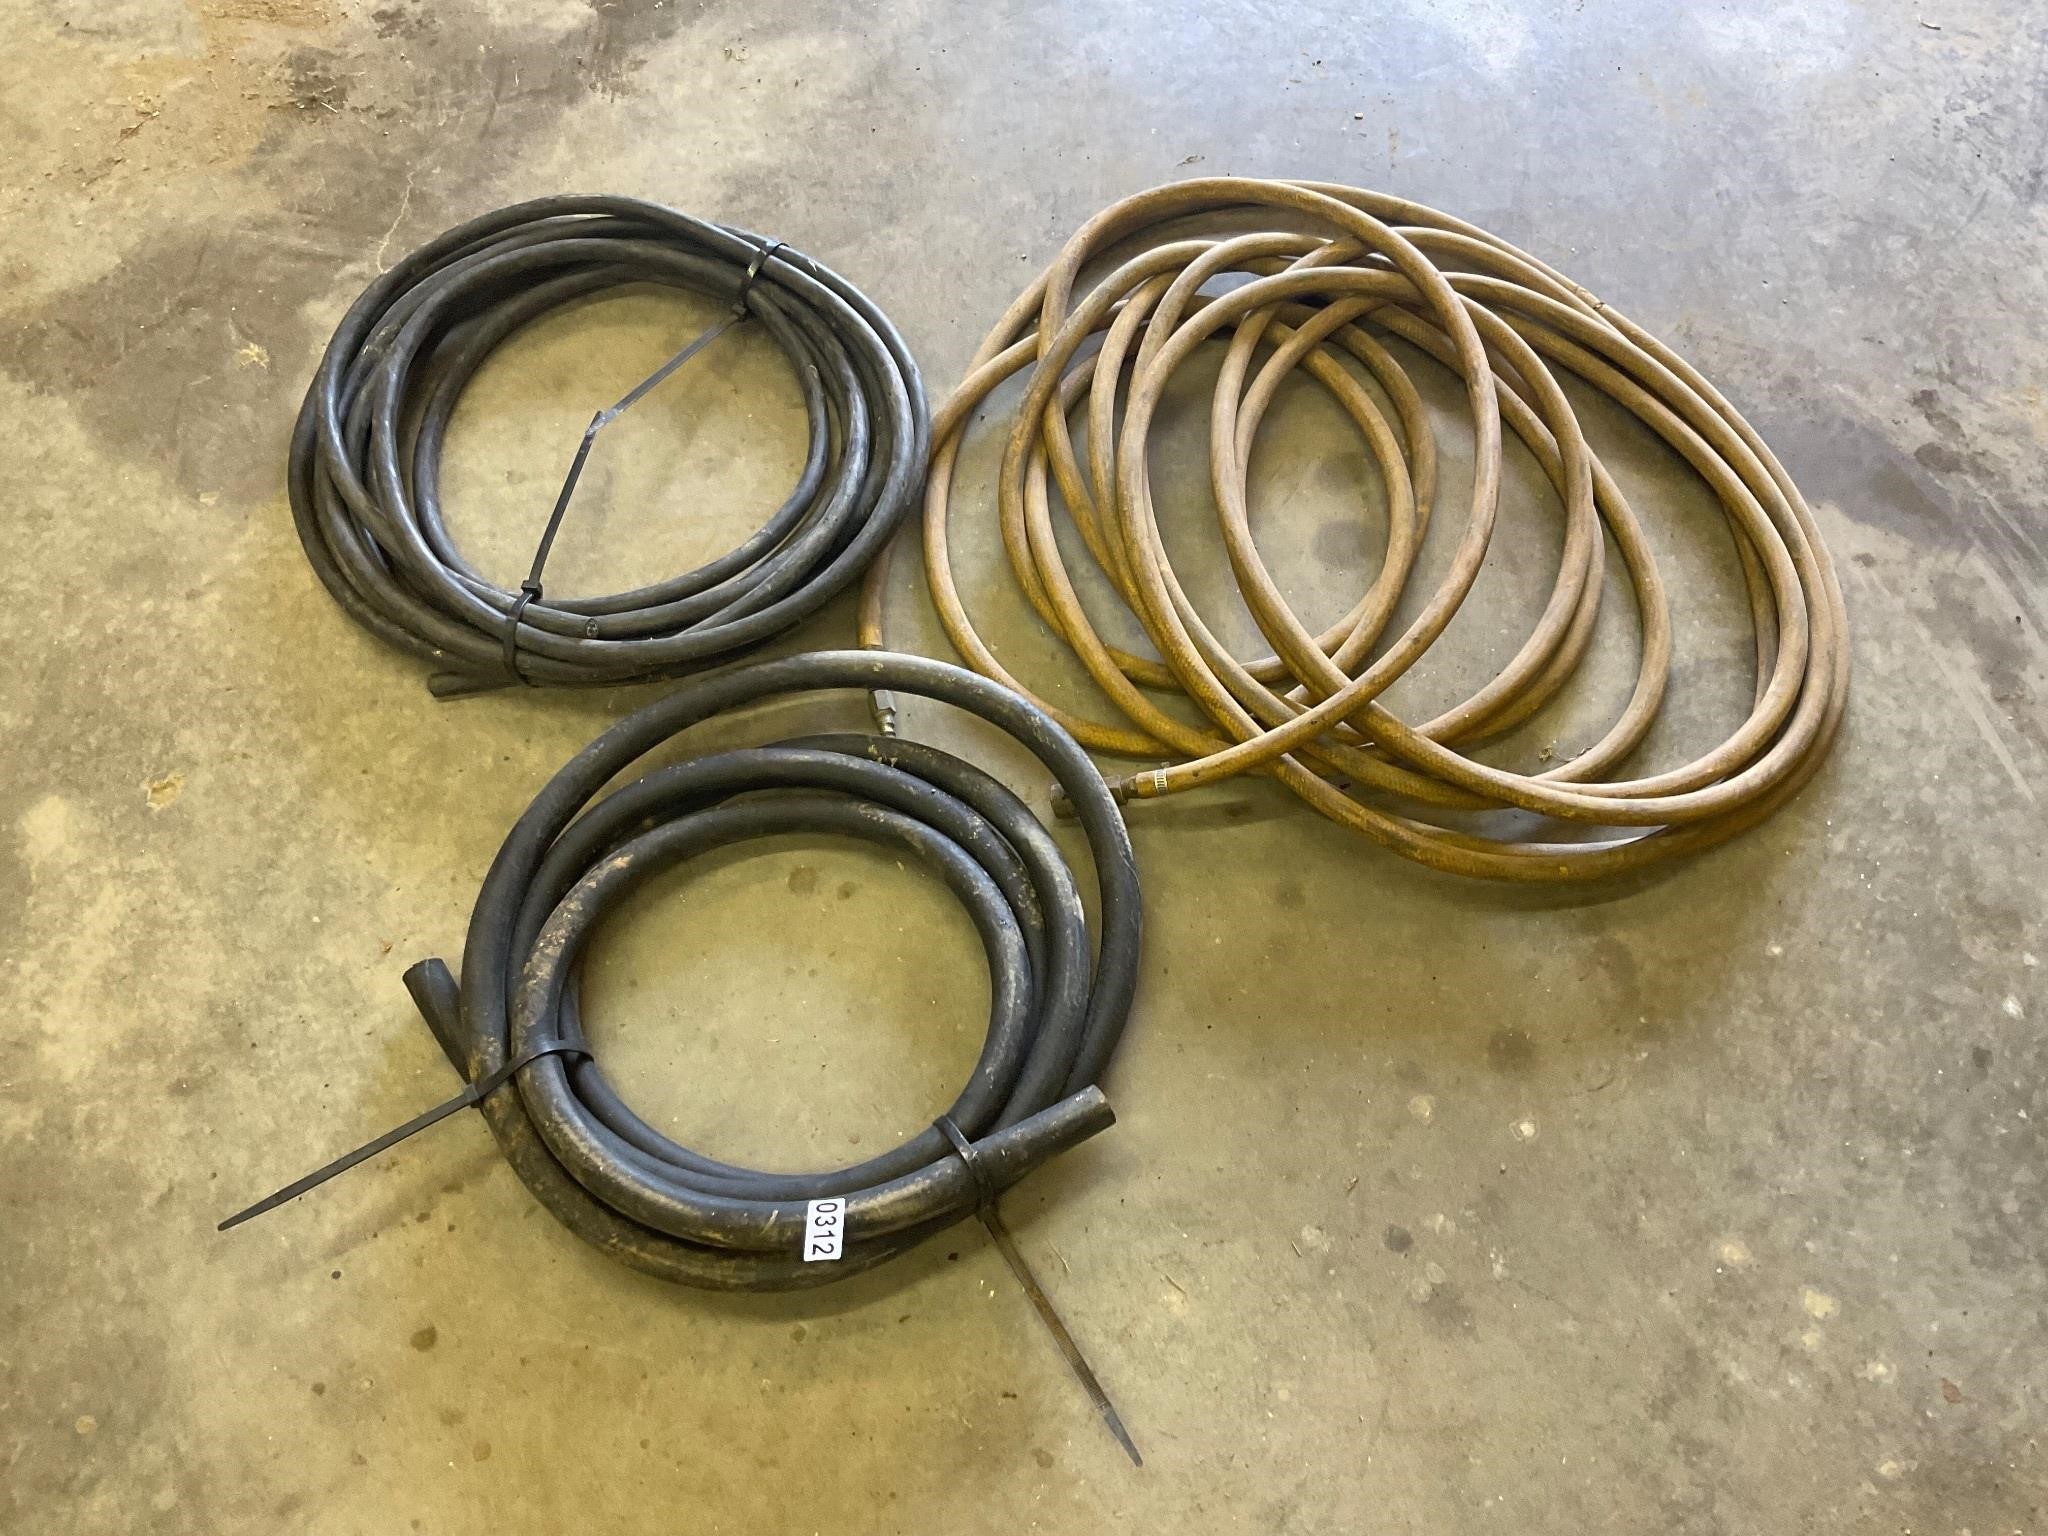 Air hose, heavy electric cable. Hose